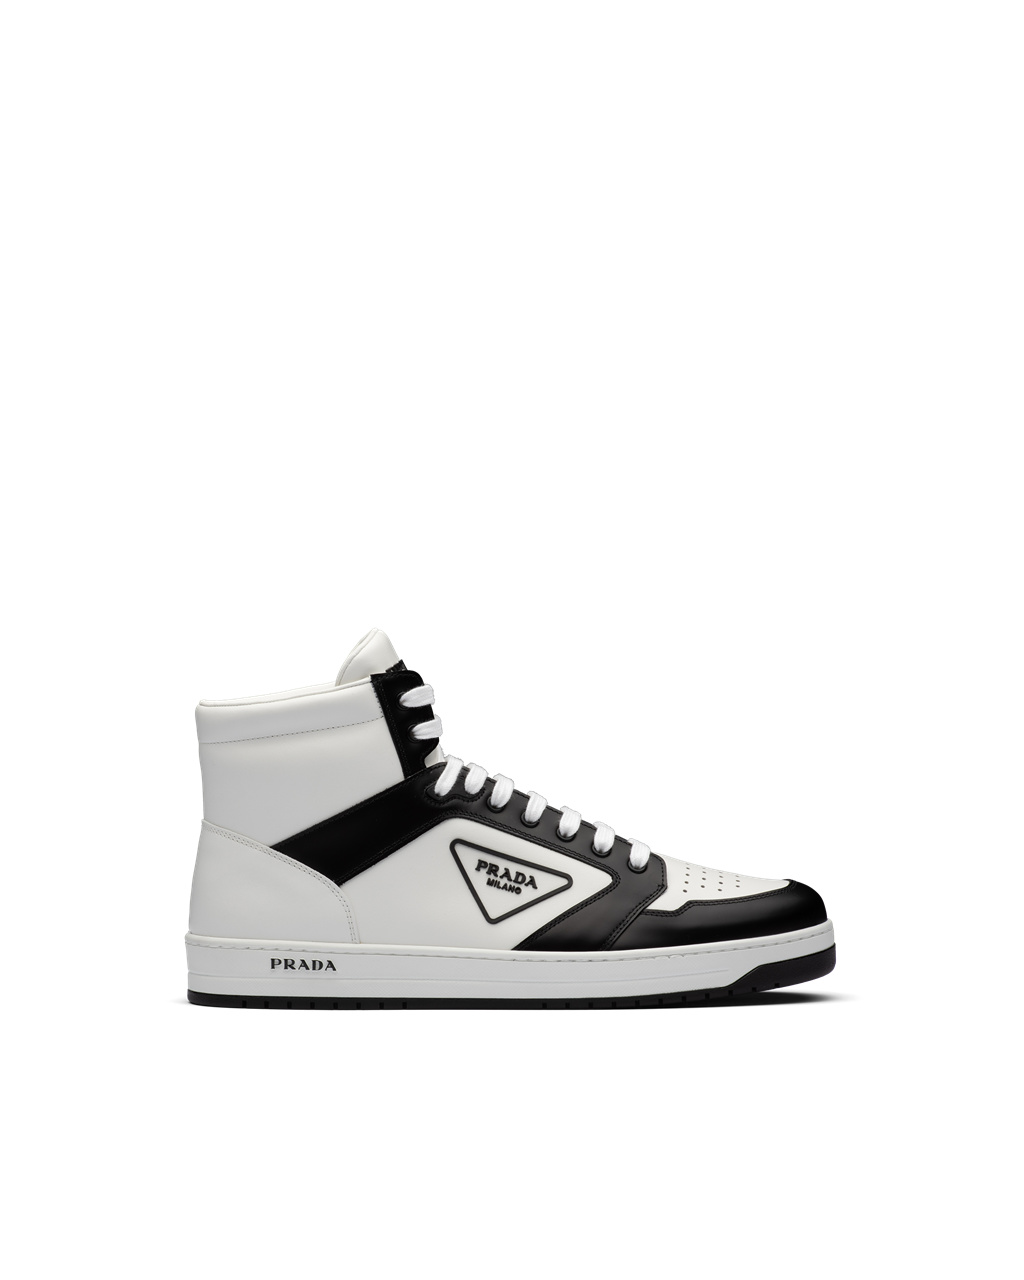 Buy Prada Sneakers Online Discount - District Leather Sneakers Mens ...